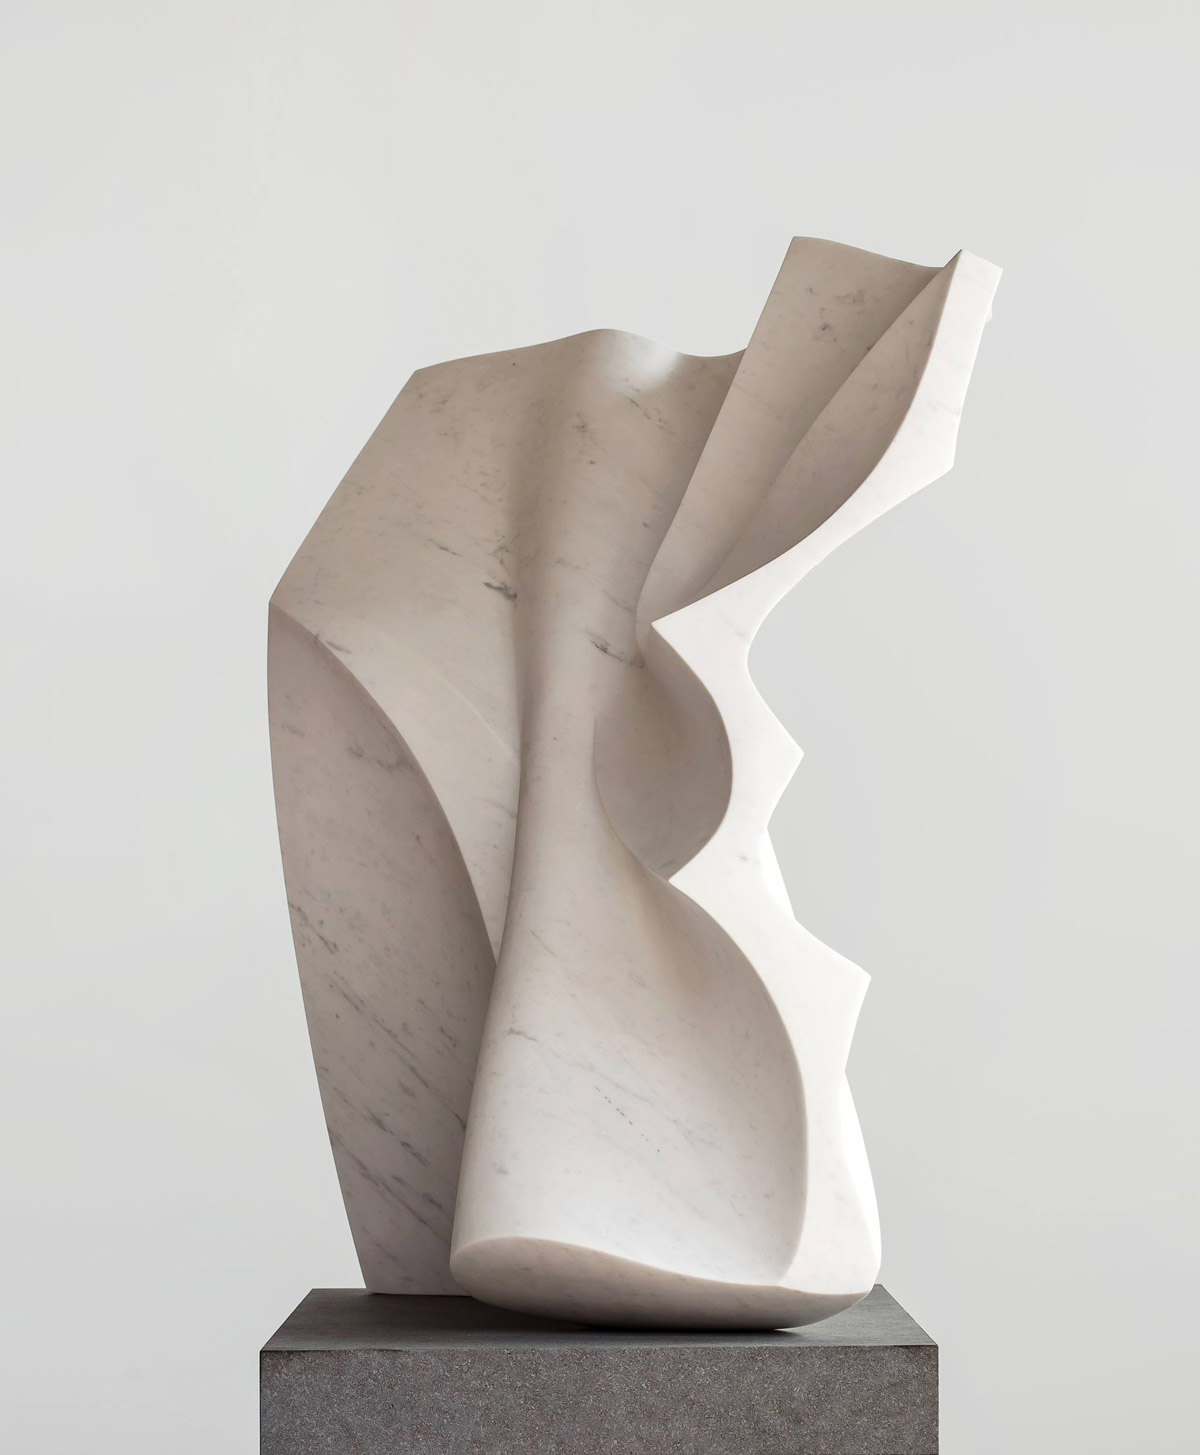 Pagina Di Marmo Sculpture by Almuth Tebbenhoff via Saatchi Art